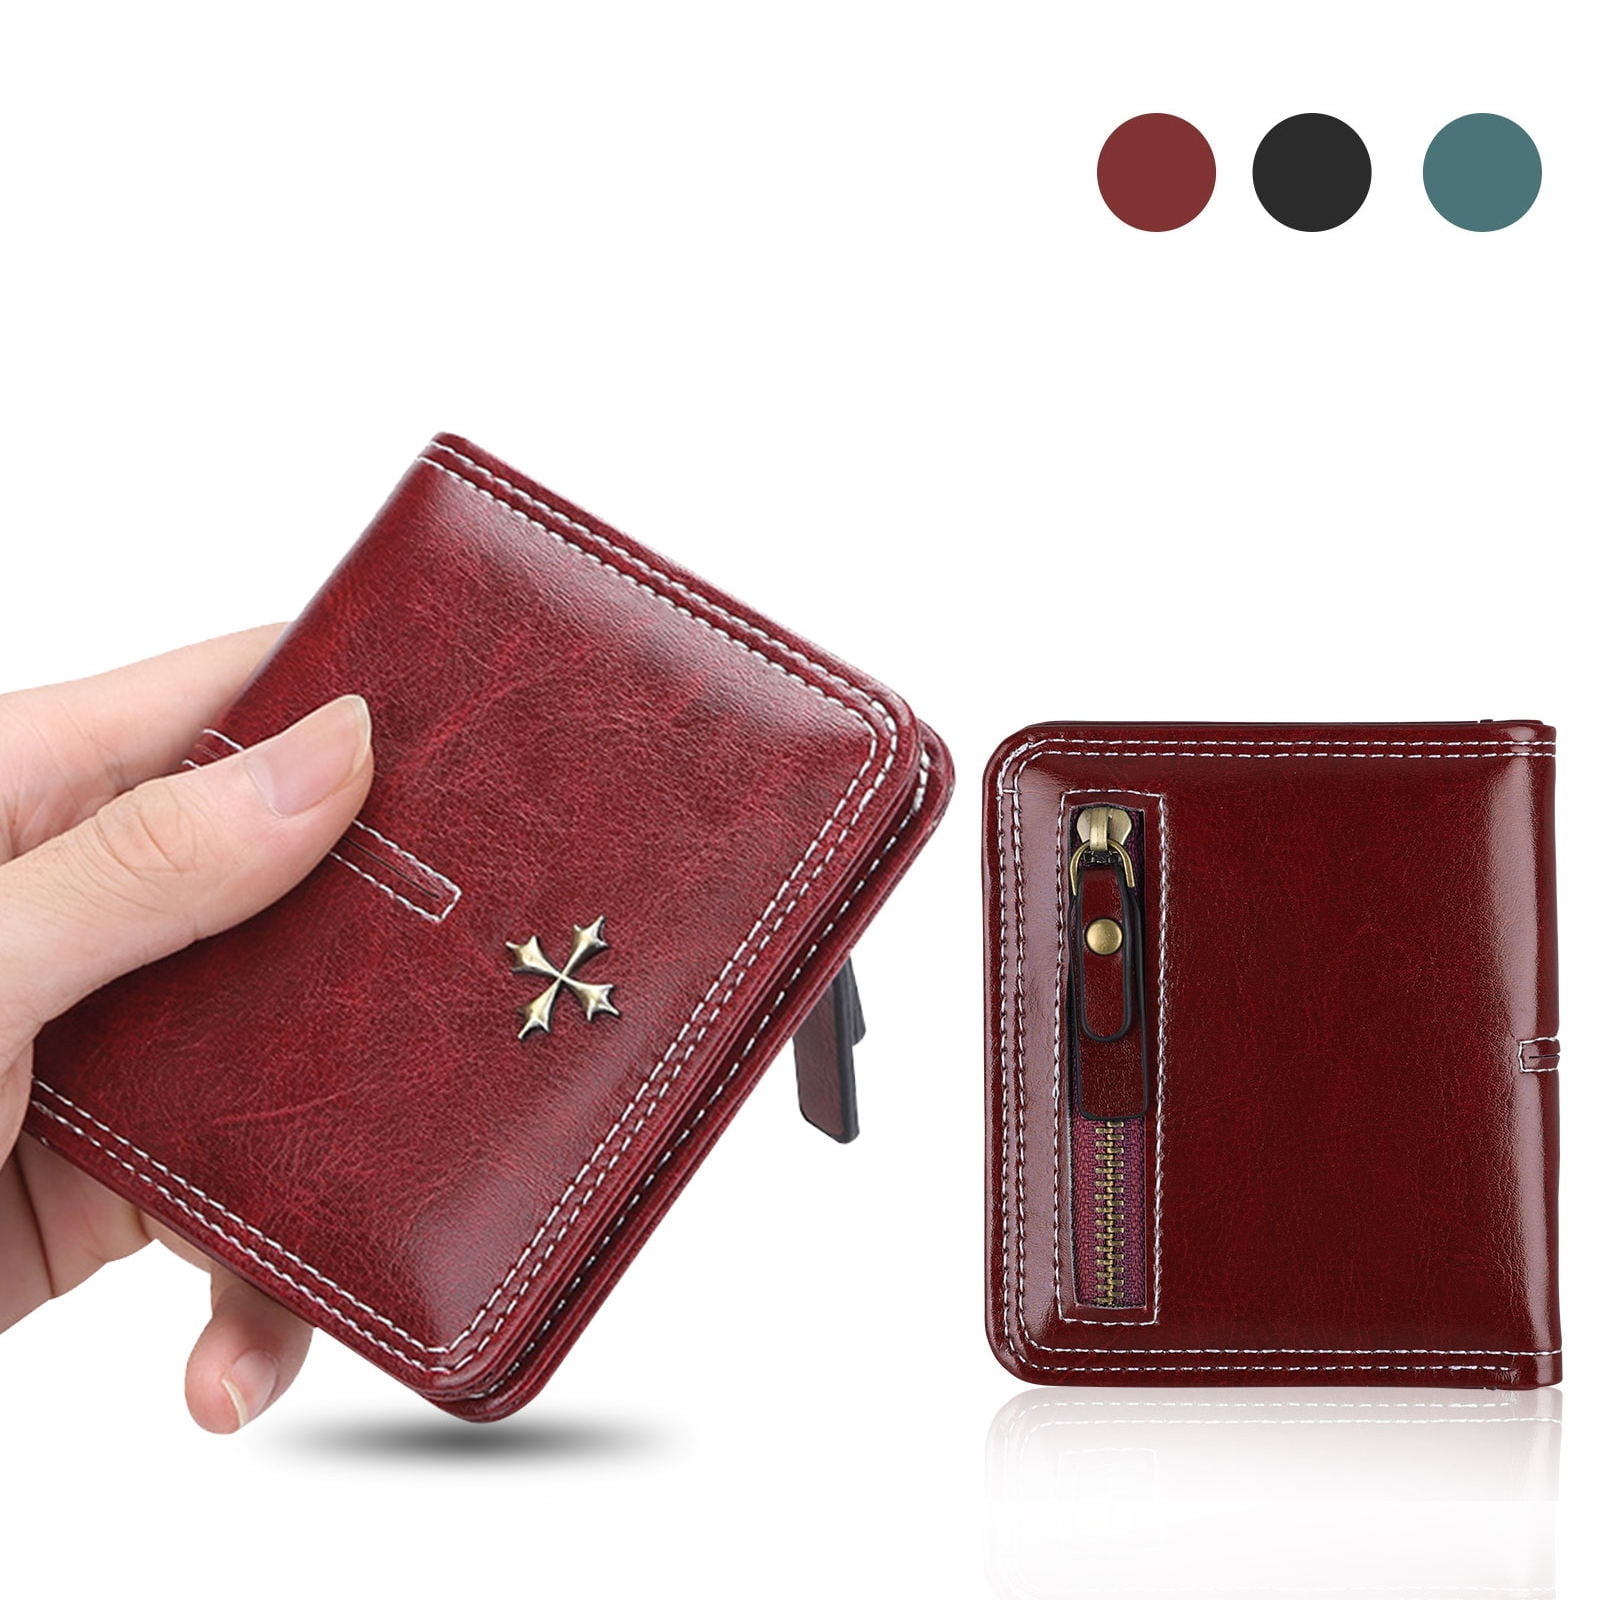 Leather Short Wallet for Women, EEEkit RFID Blocking Wallet, Ladies Purses Small Wallet, Card Holder Zipper Coin Pocket, Zip-Around Security Wallet